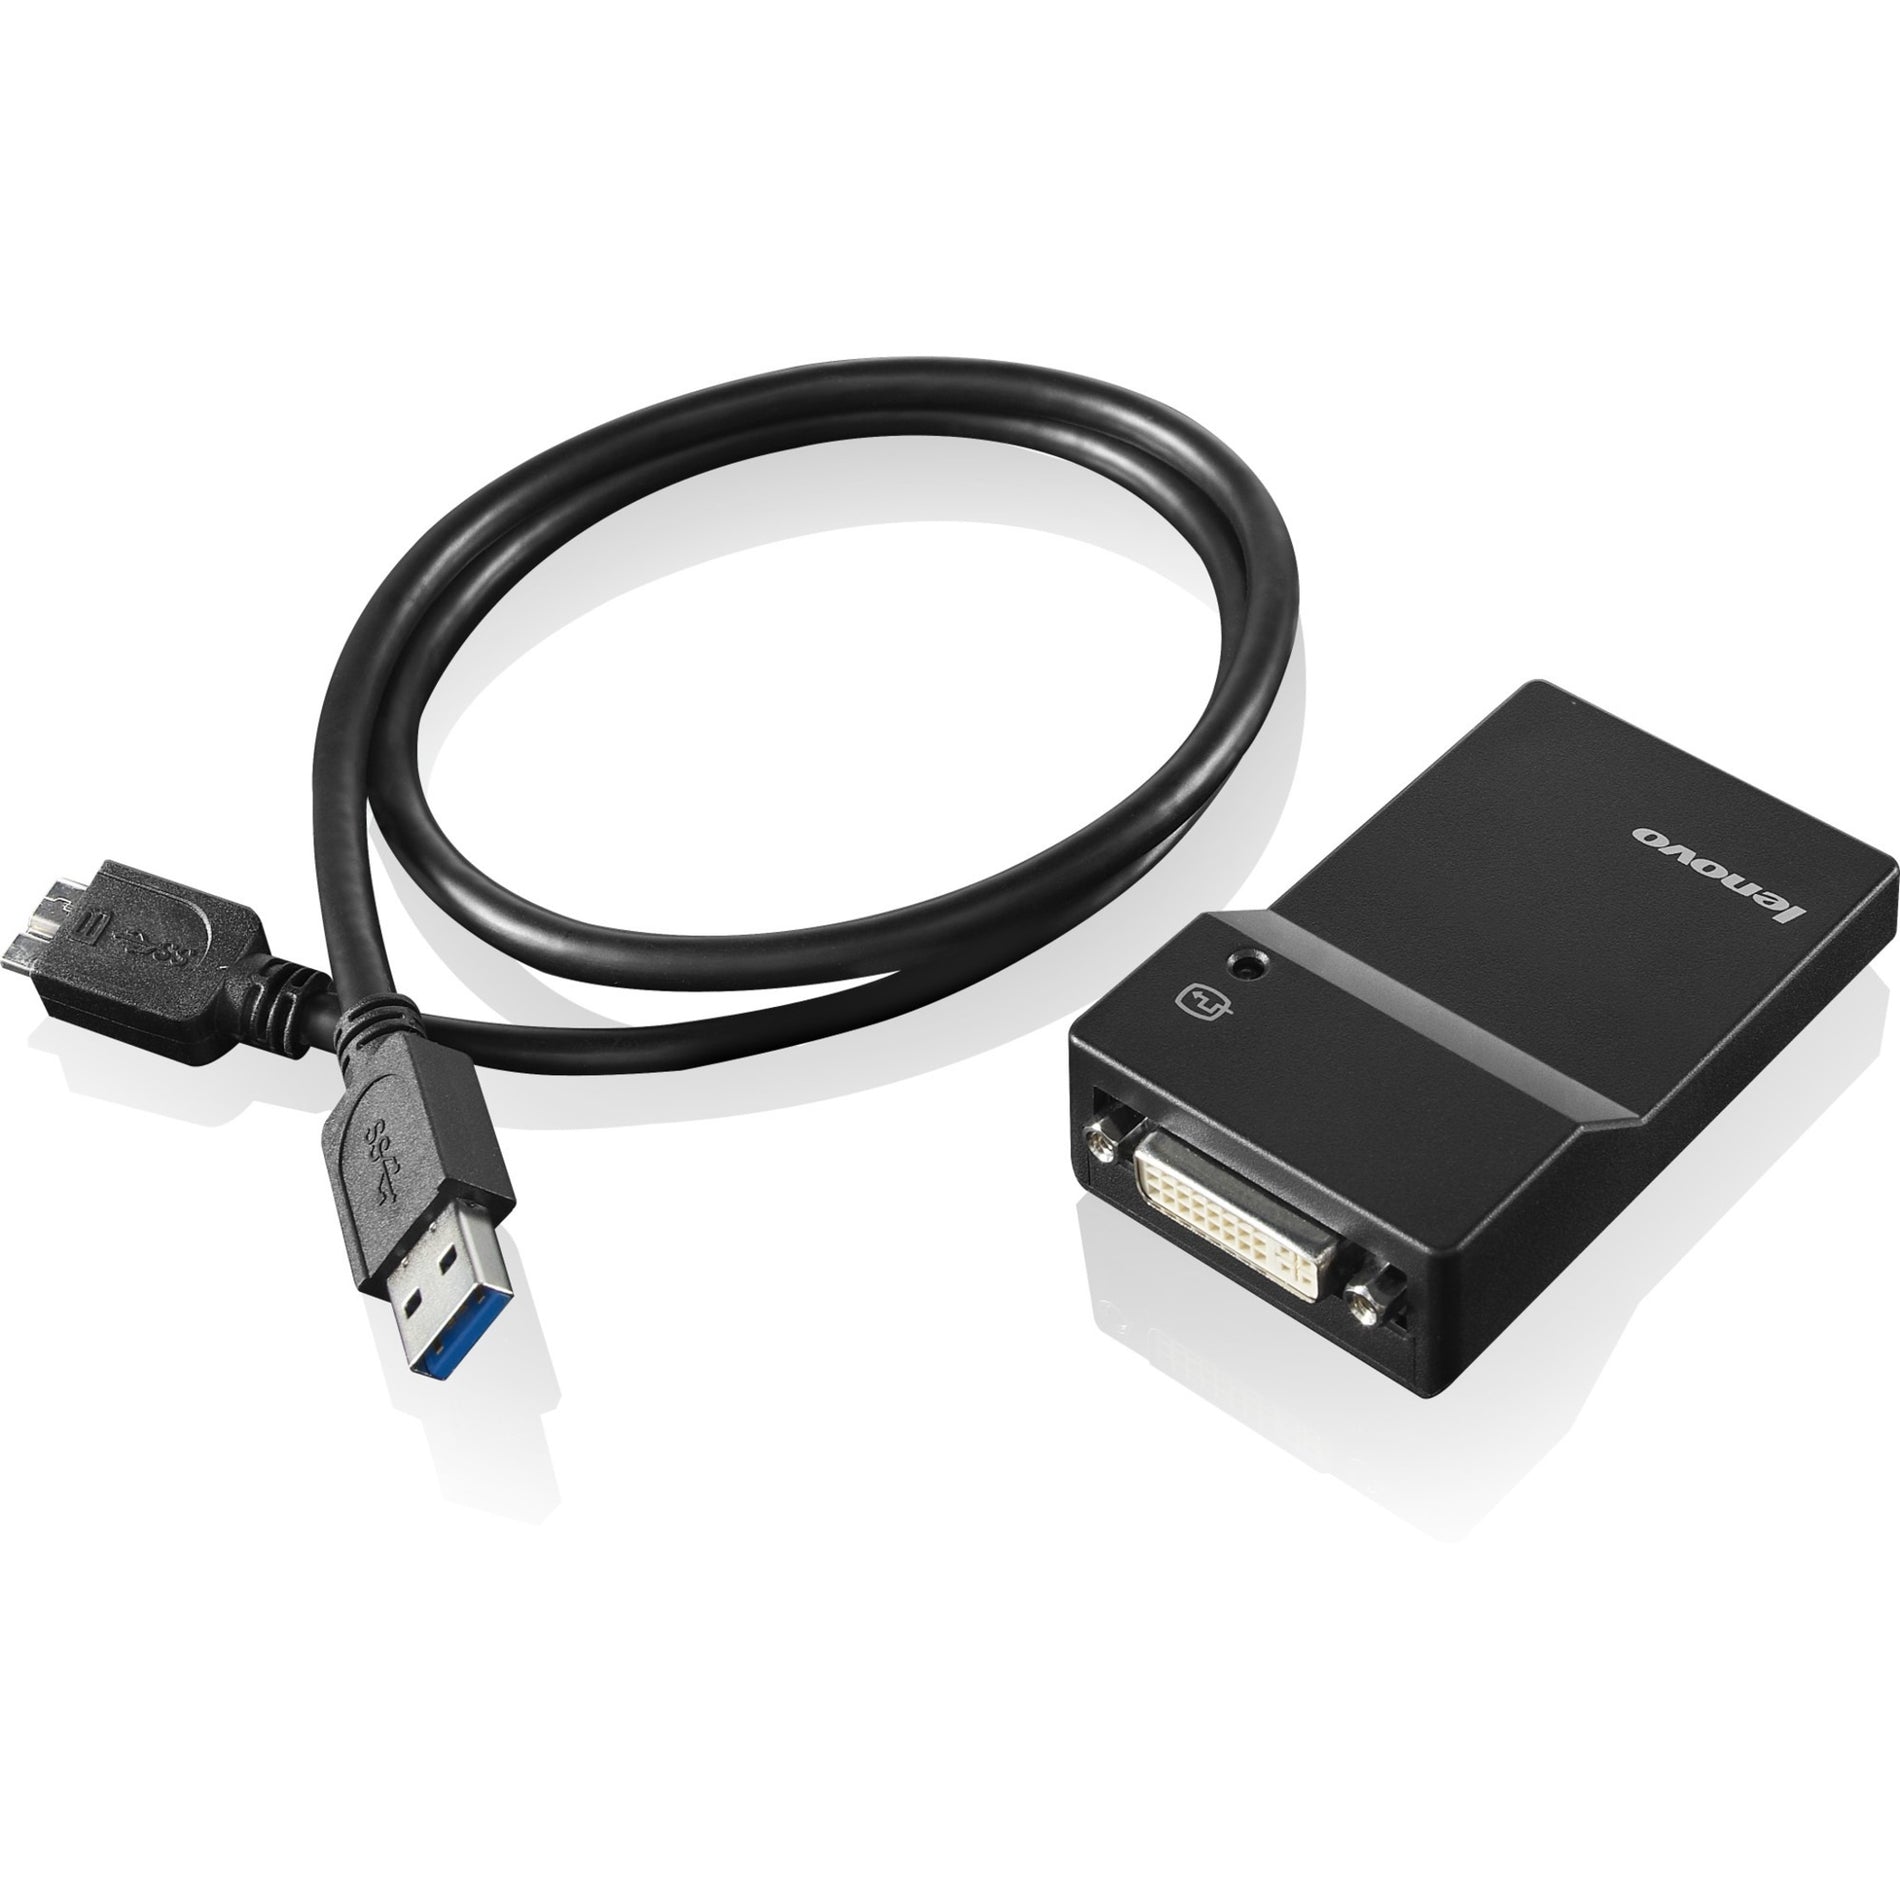 Lenovo 0B47072 Graphic Adapter USB 3.0 DVI, Analog and Digital Signal, External Form Factor